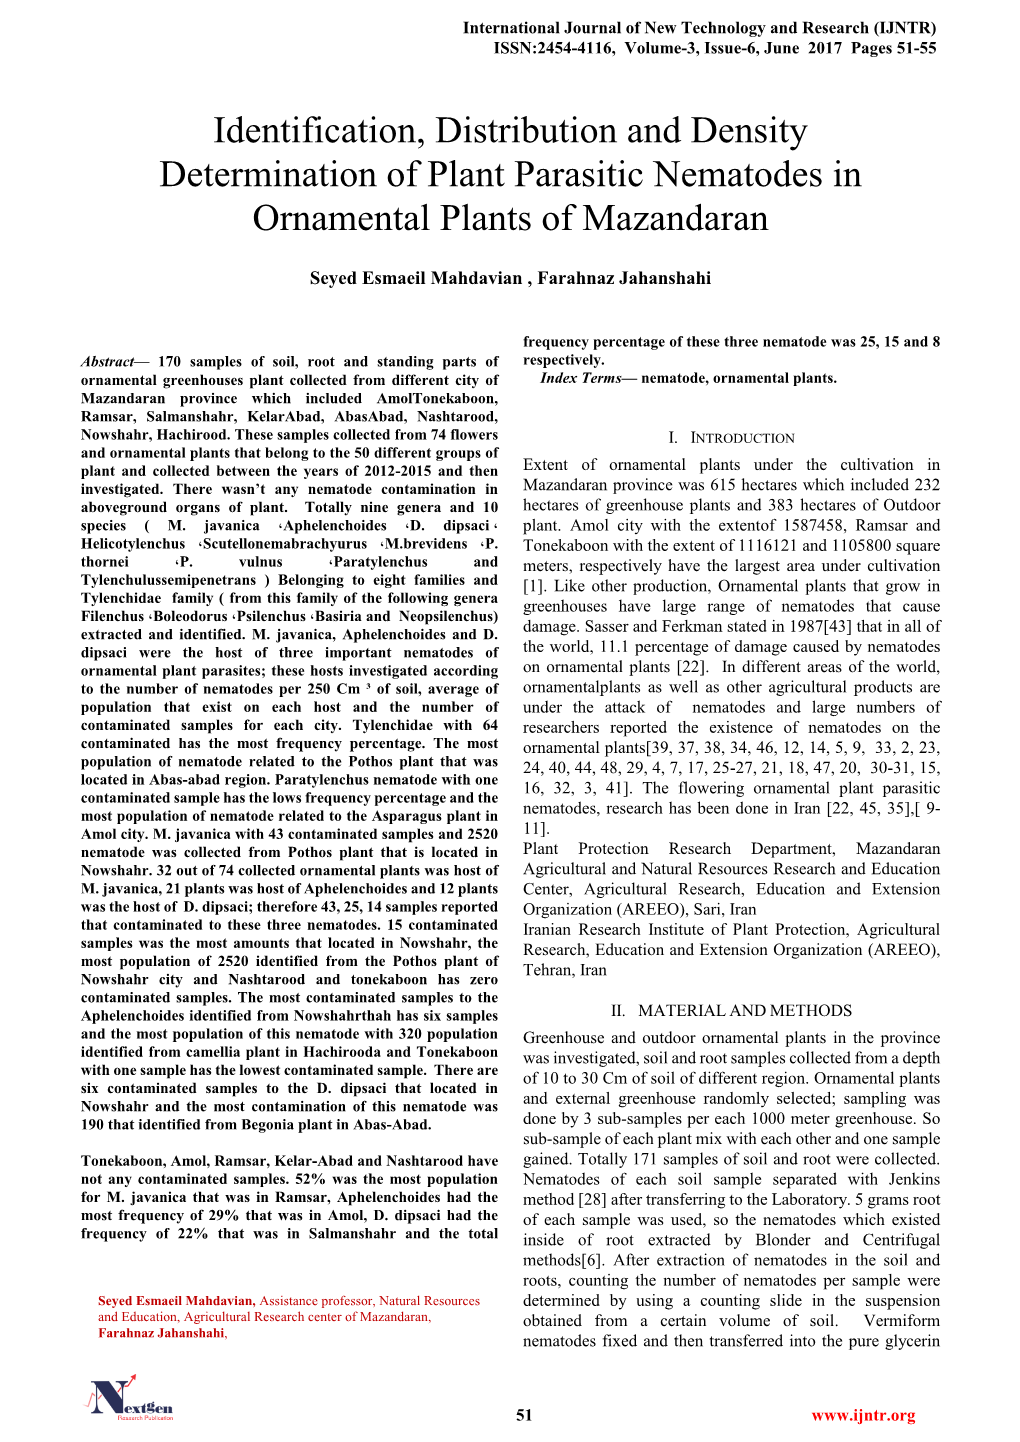 Identification, Distribution and Density Determination of Plant Parasitic Nematodes in Ornamental Plants of Mazandaran